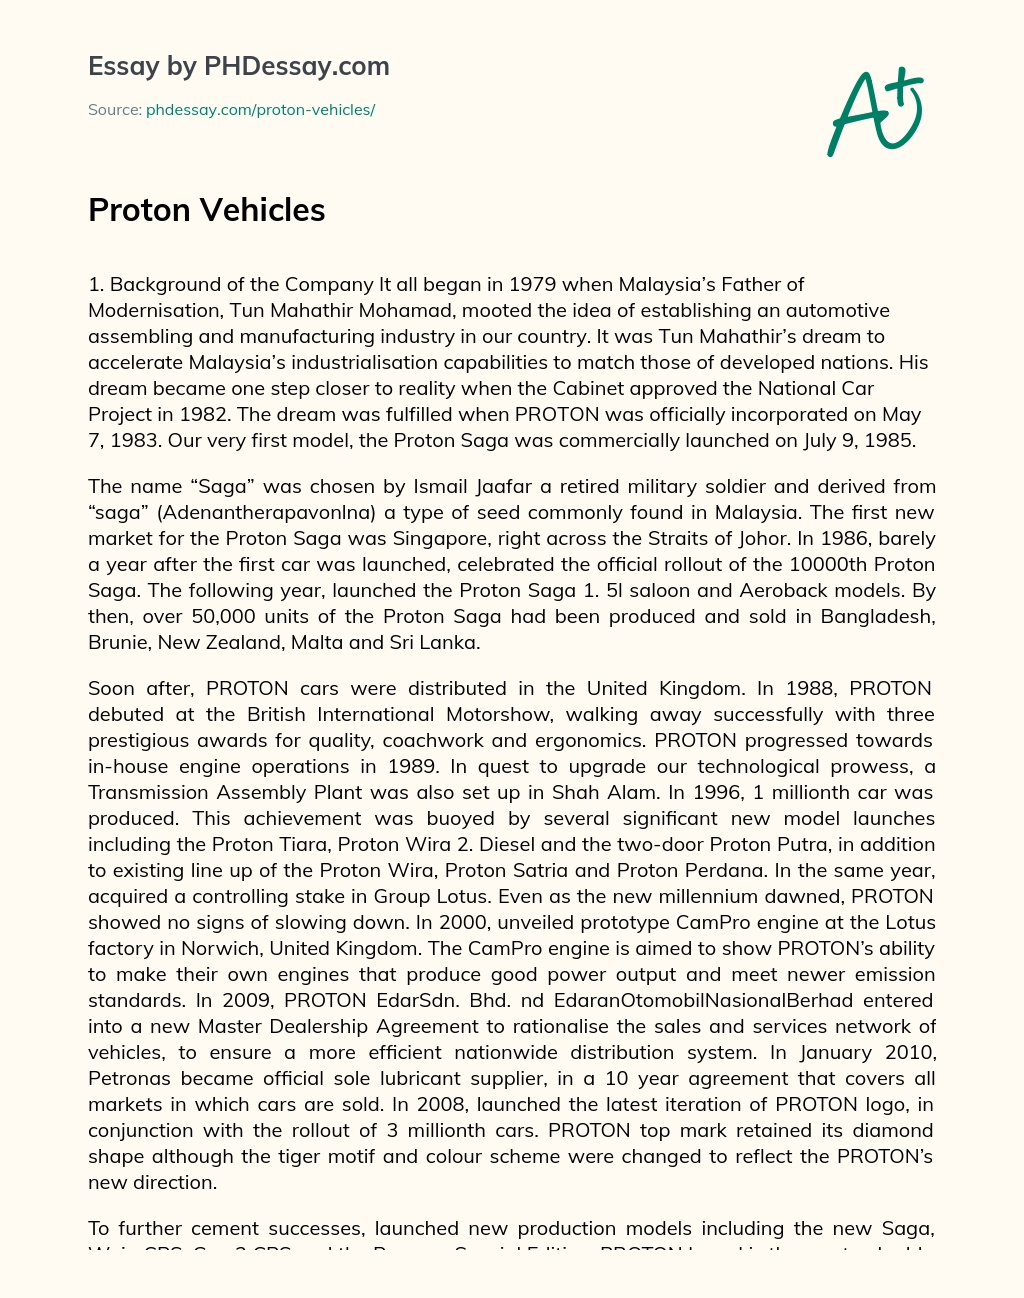 Proton Vehicles essay